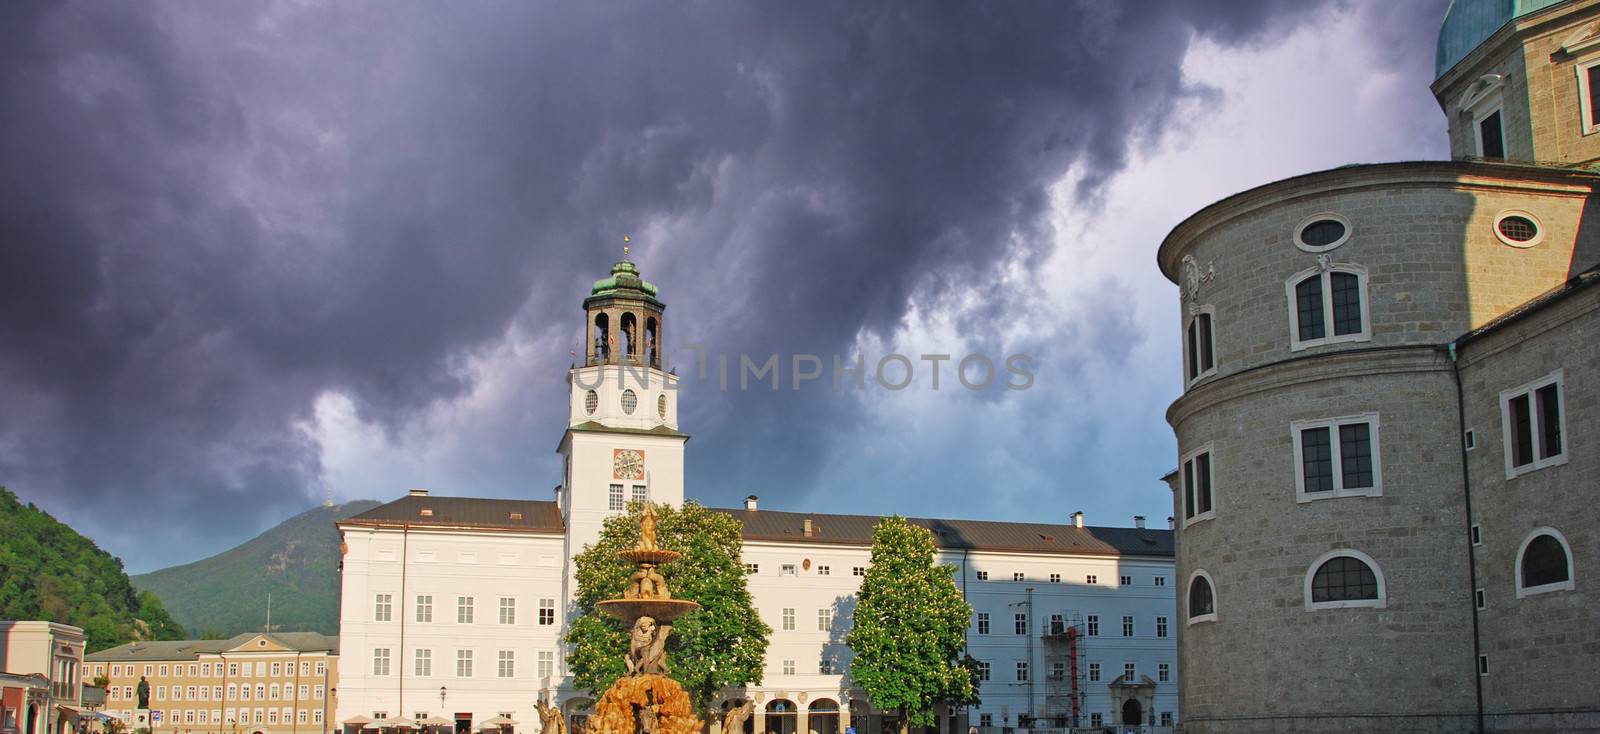 Storm approaching Salzburg, Austria by jovannig